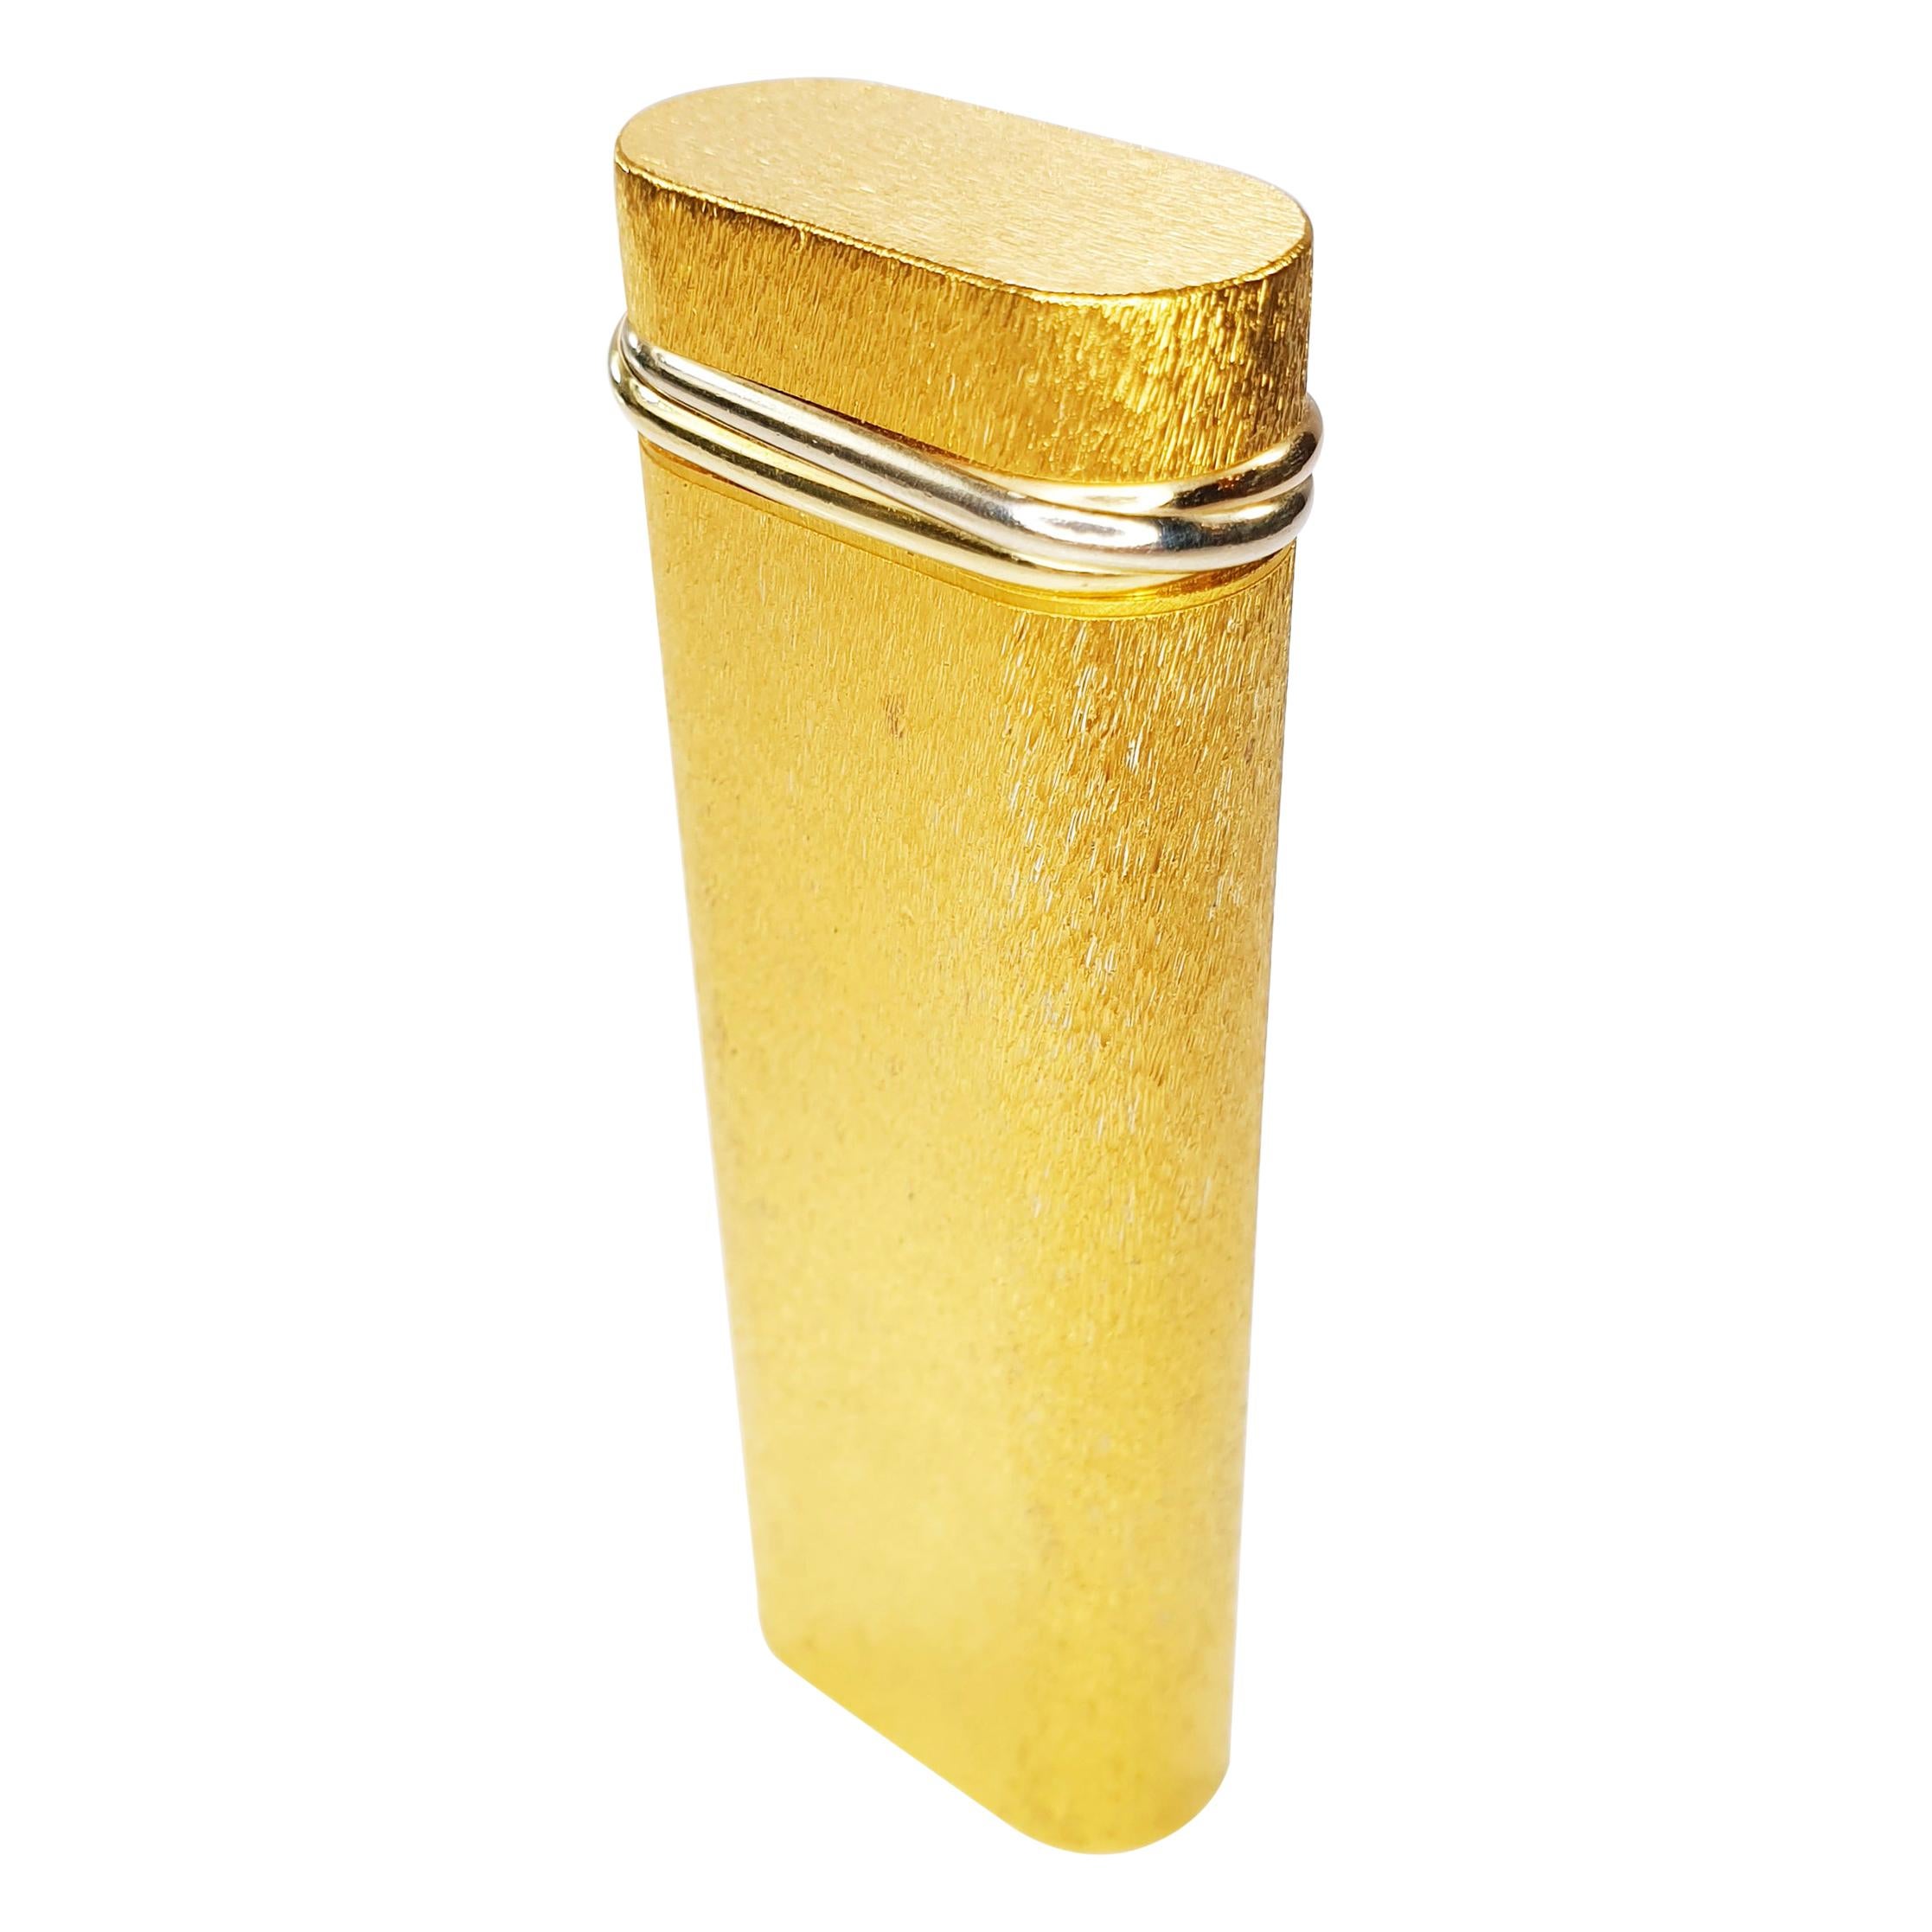 Art Deco Style Cartier Lighter Gold-Plated Guillochet Finish